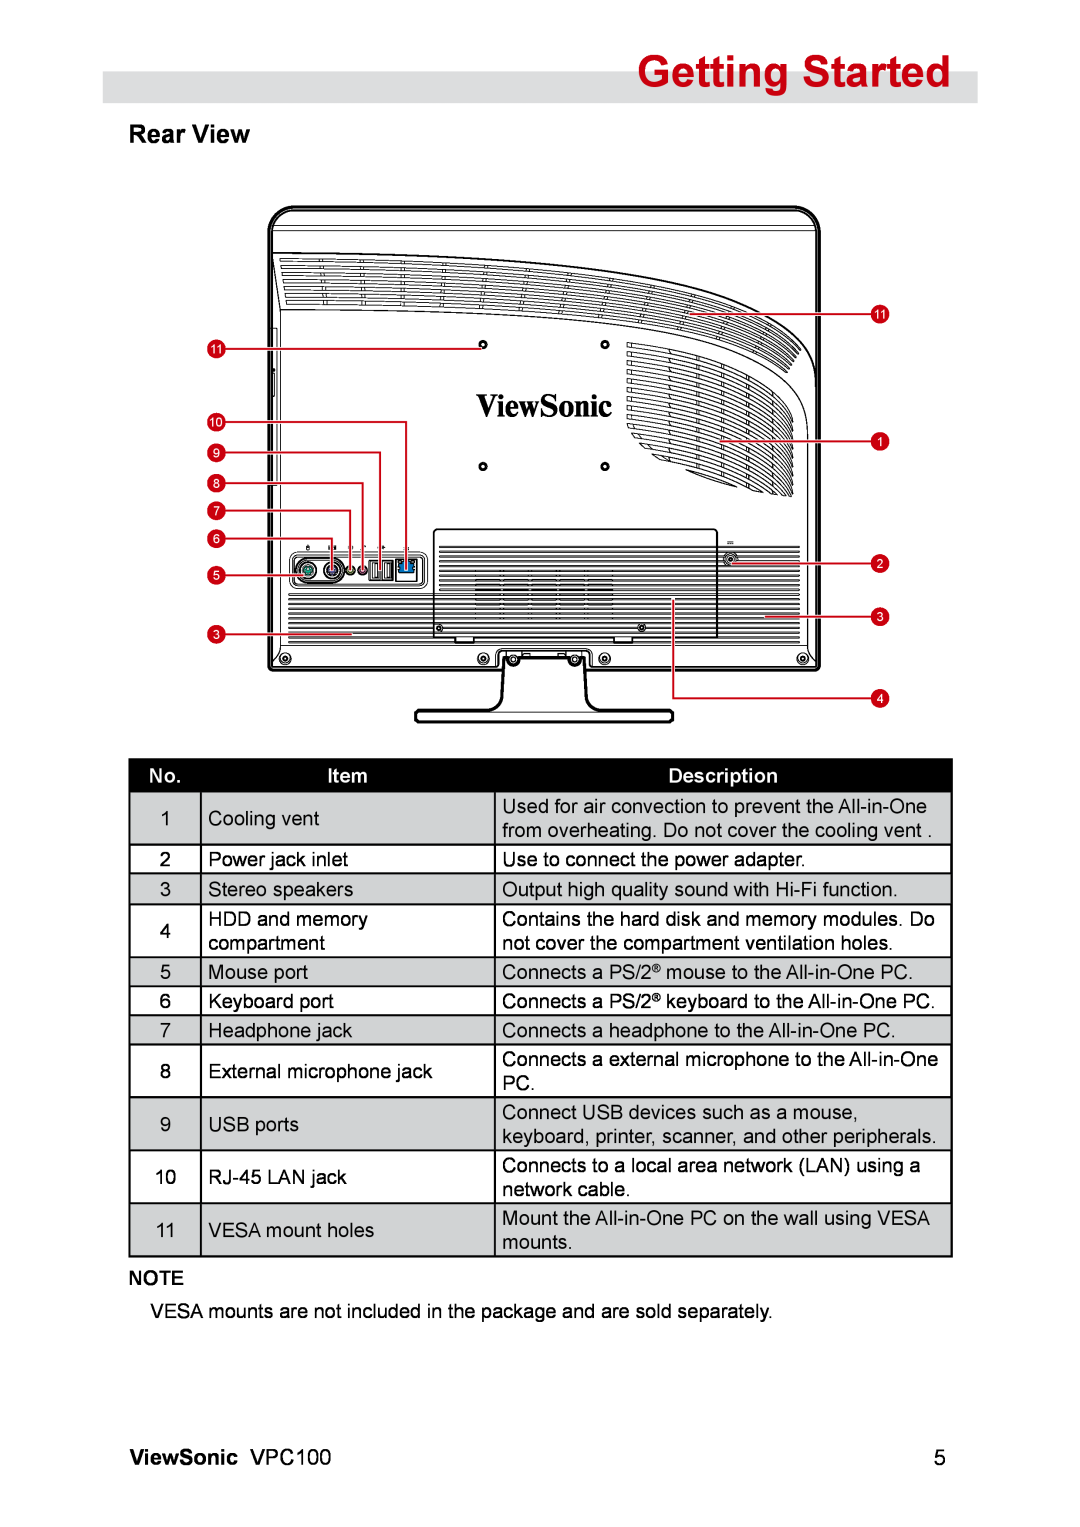 ViewSonic manual Rear View, Getting Started, ViewSonic VPC100, Description 